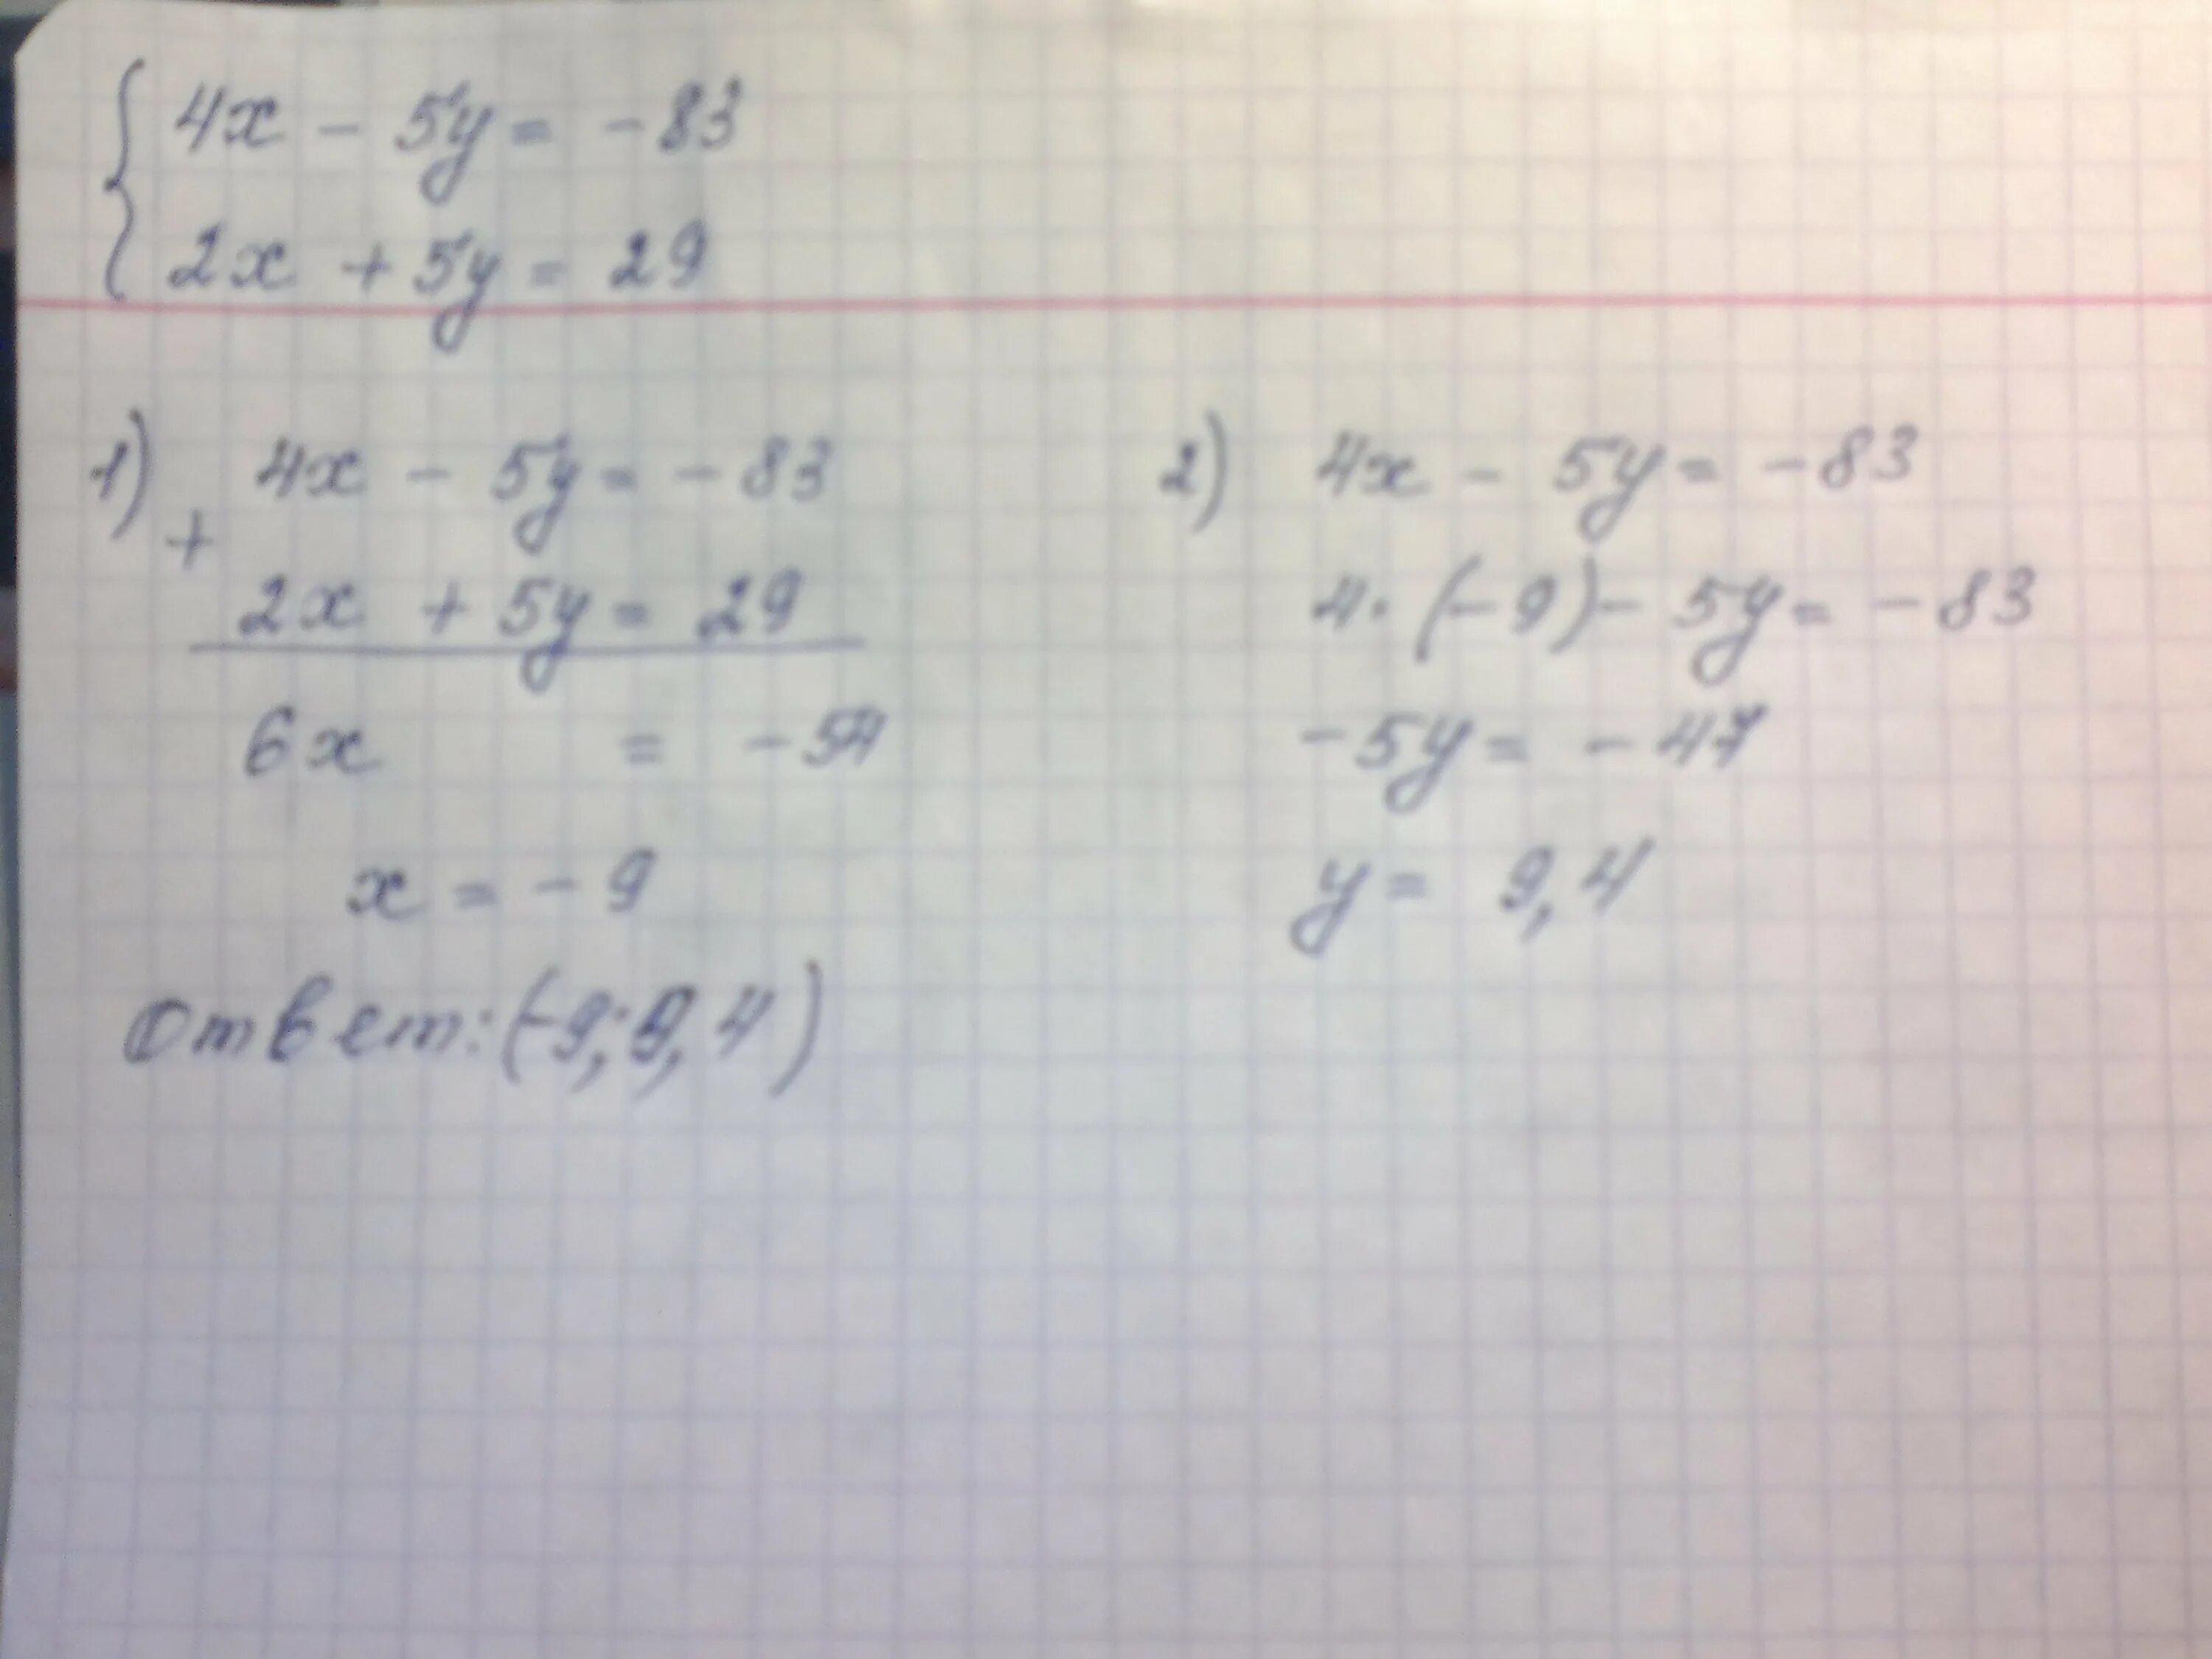 4x 5y 83 2x 5y 29. Решите методом сложения систему уравнений 4x-5y -83. Решите методом сложения систему уравнений 4x-5y -83 2x+5y 29. Решите методом сложения систему уравнения 4 x.